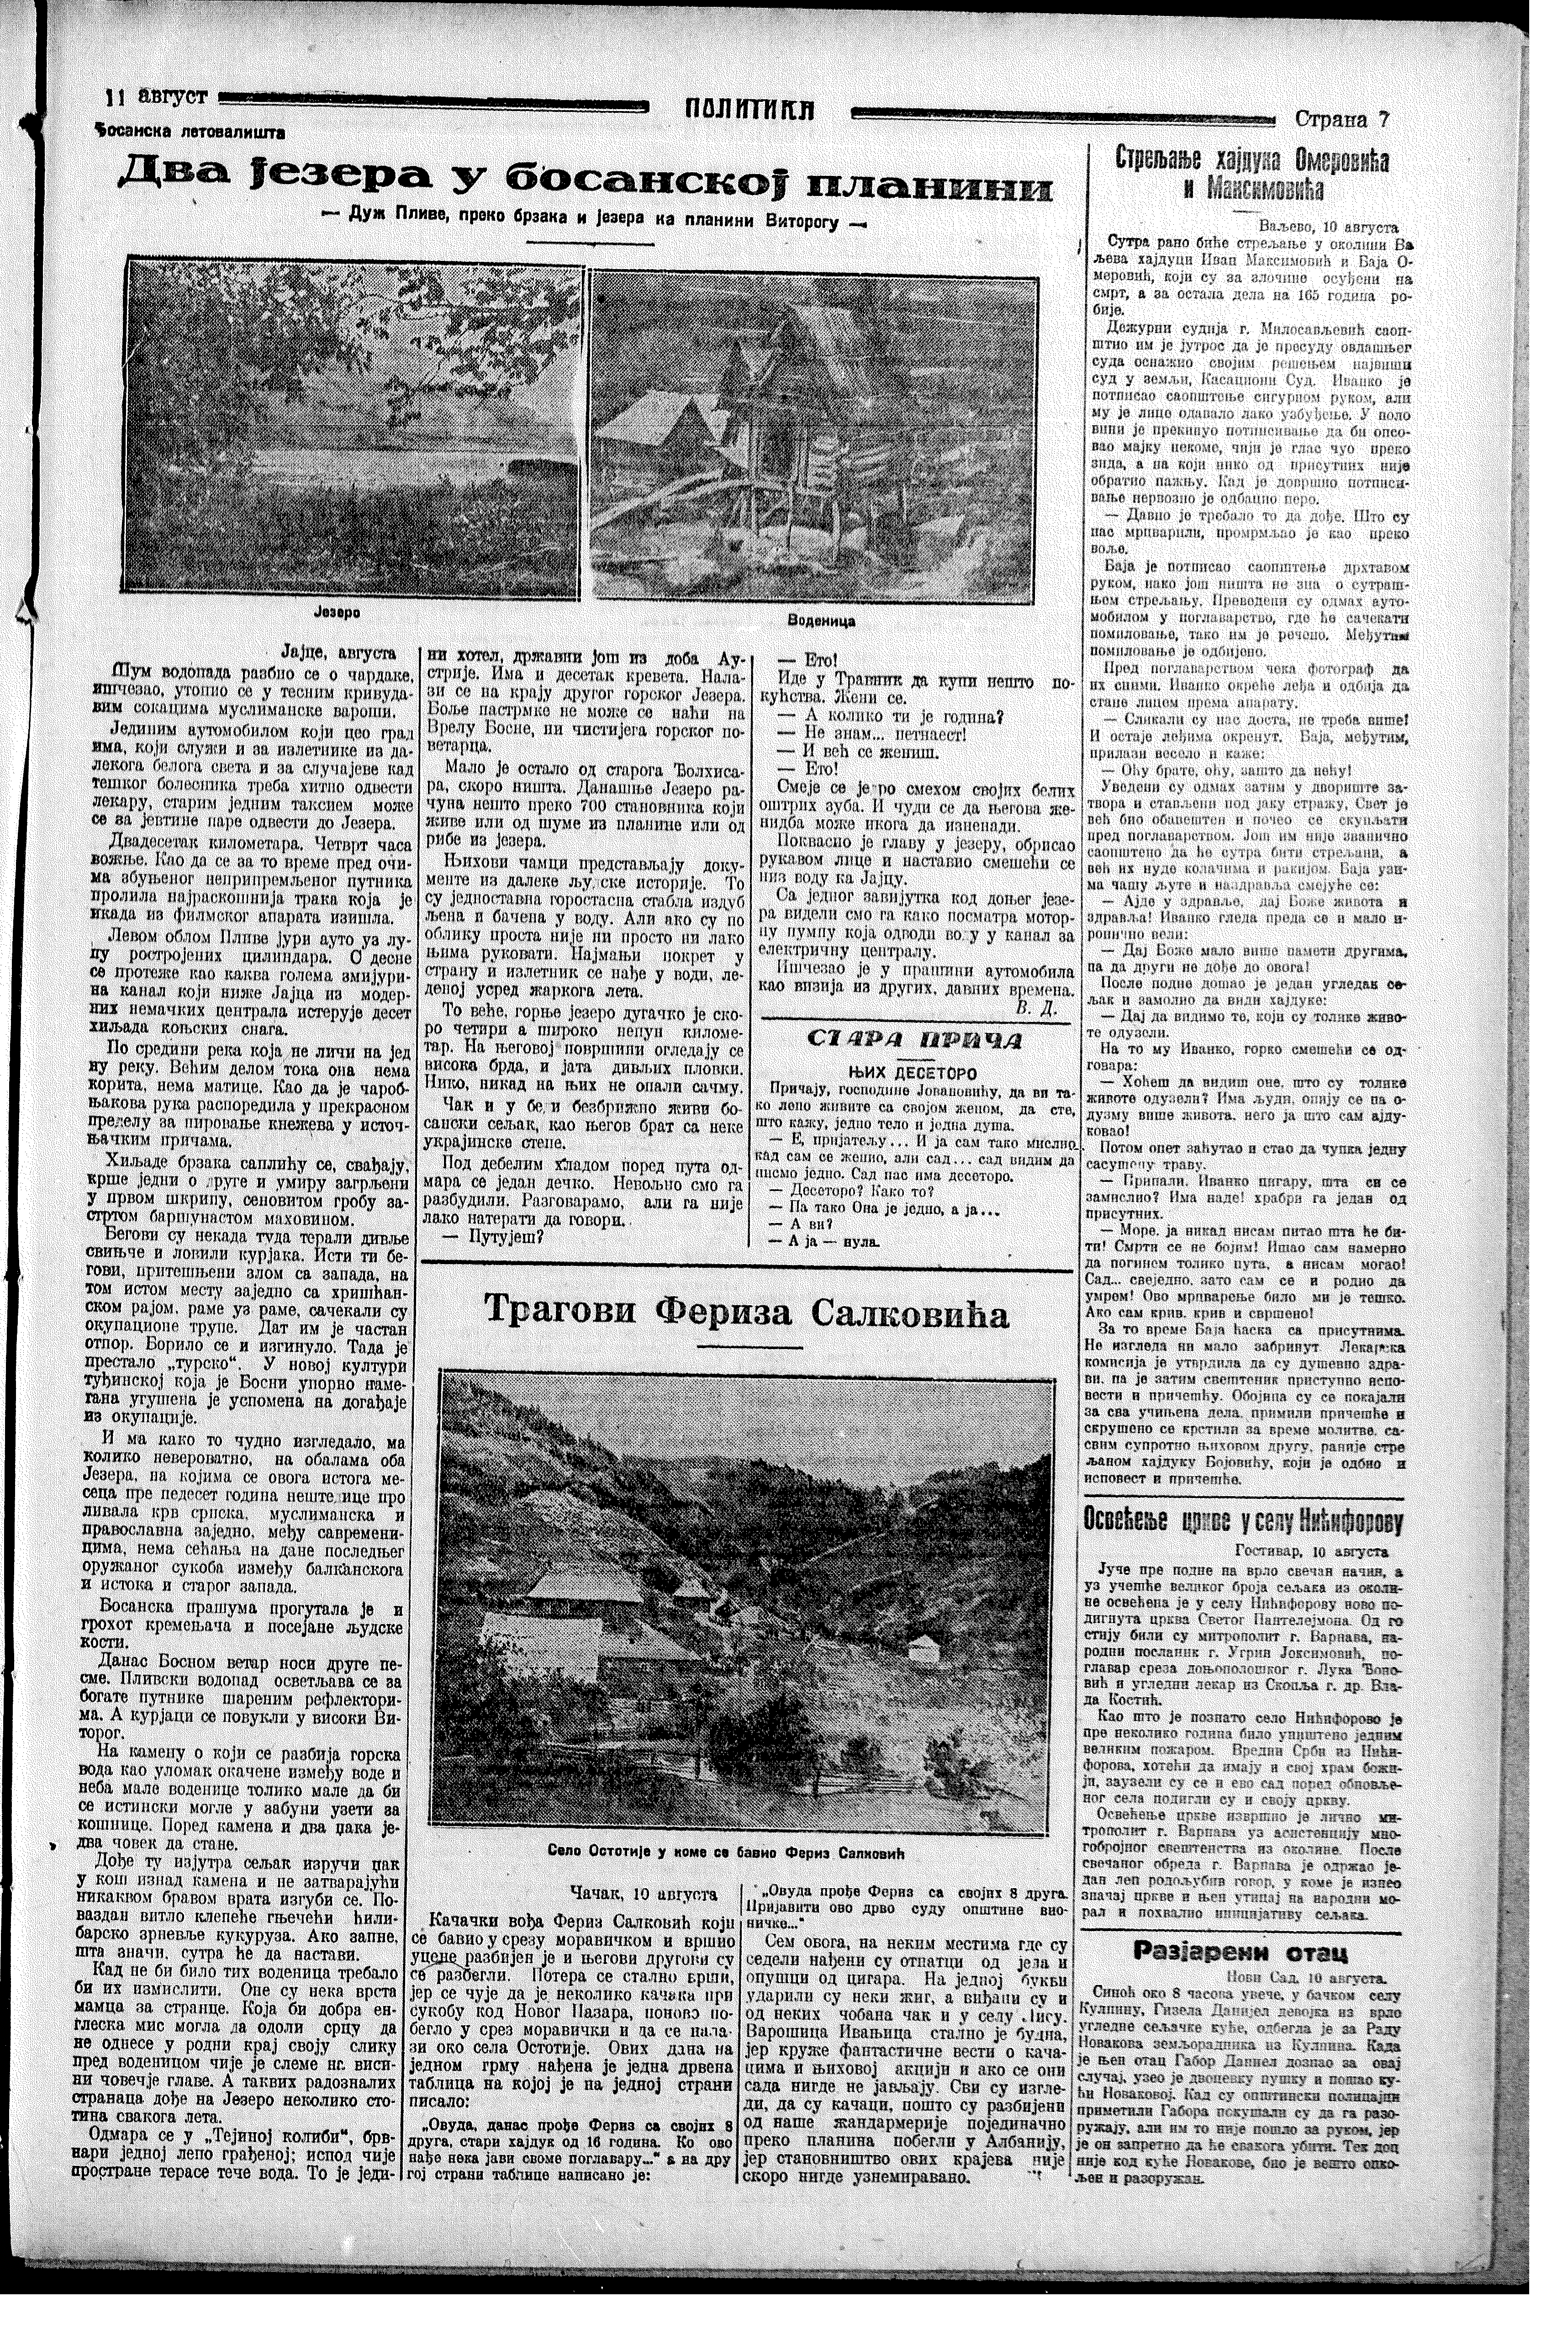 Streljanje hajduka, Politika, 11.08.1928.